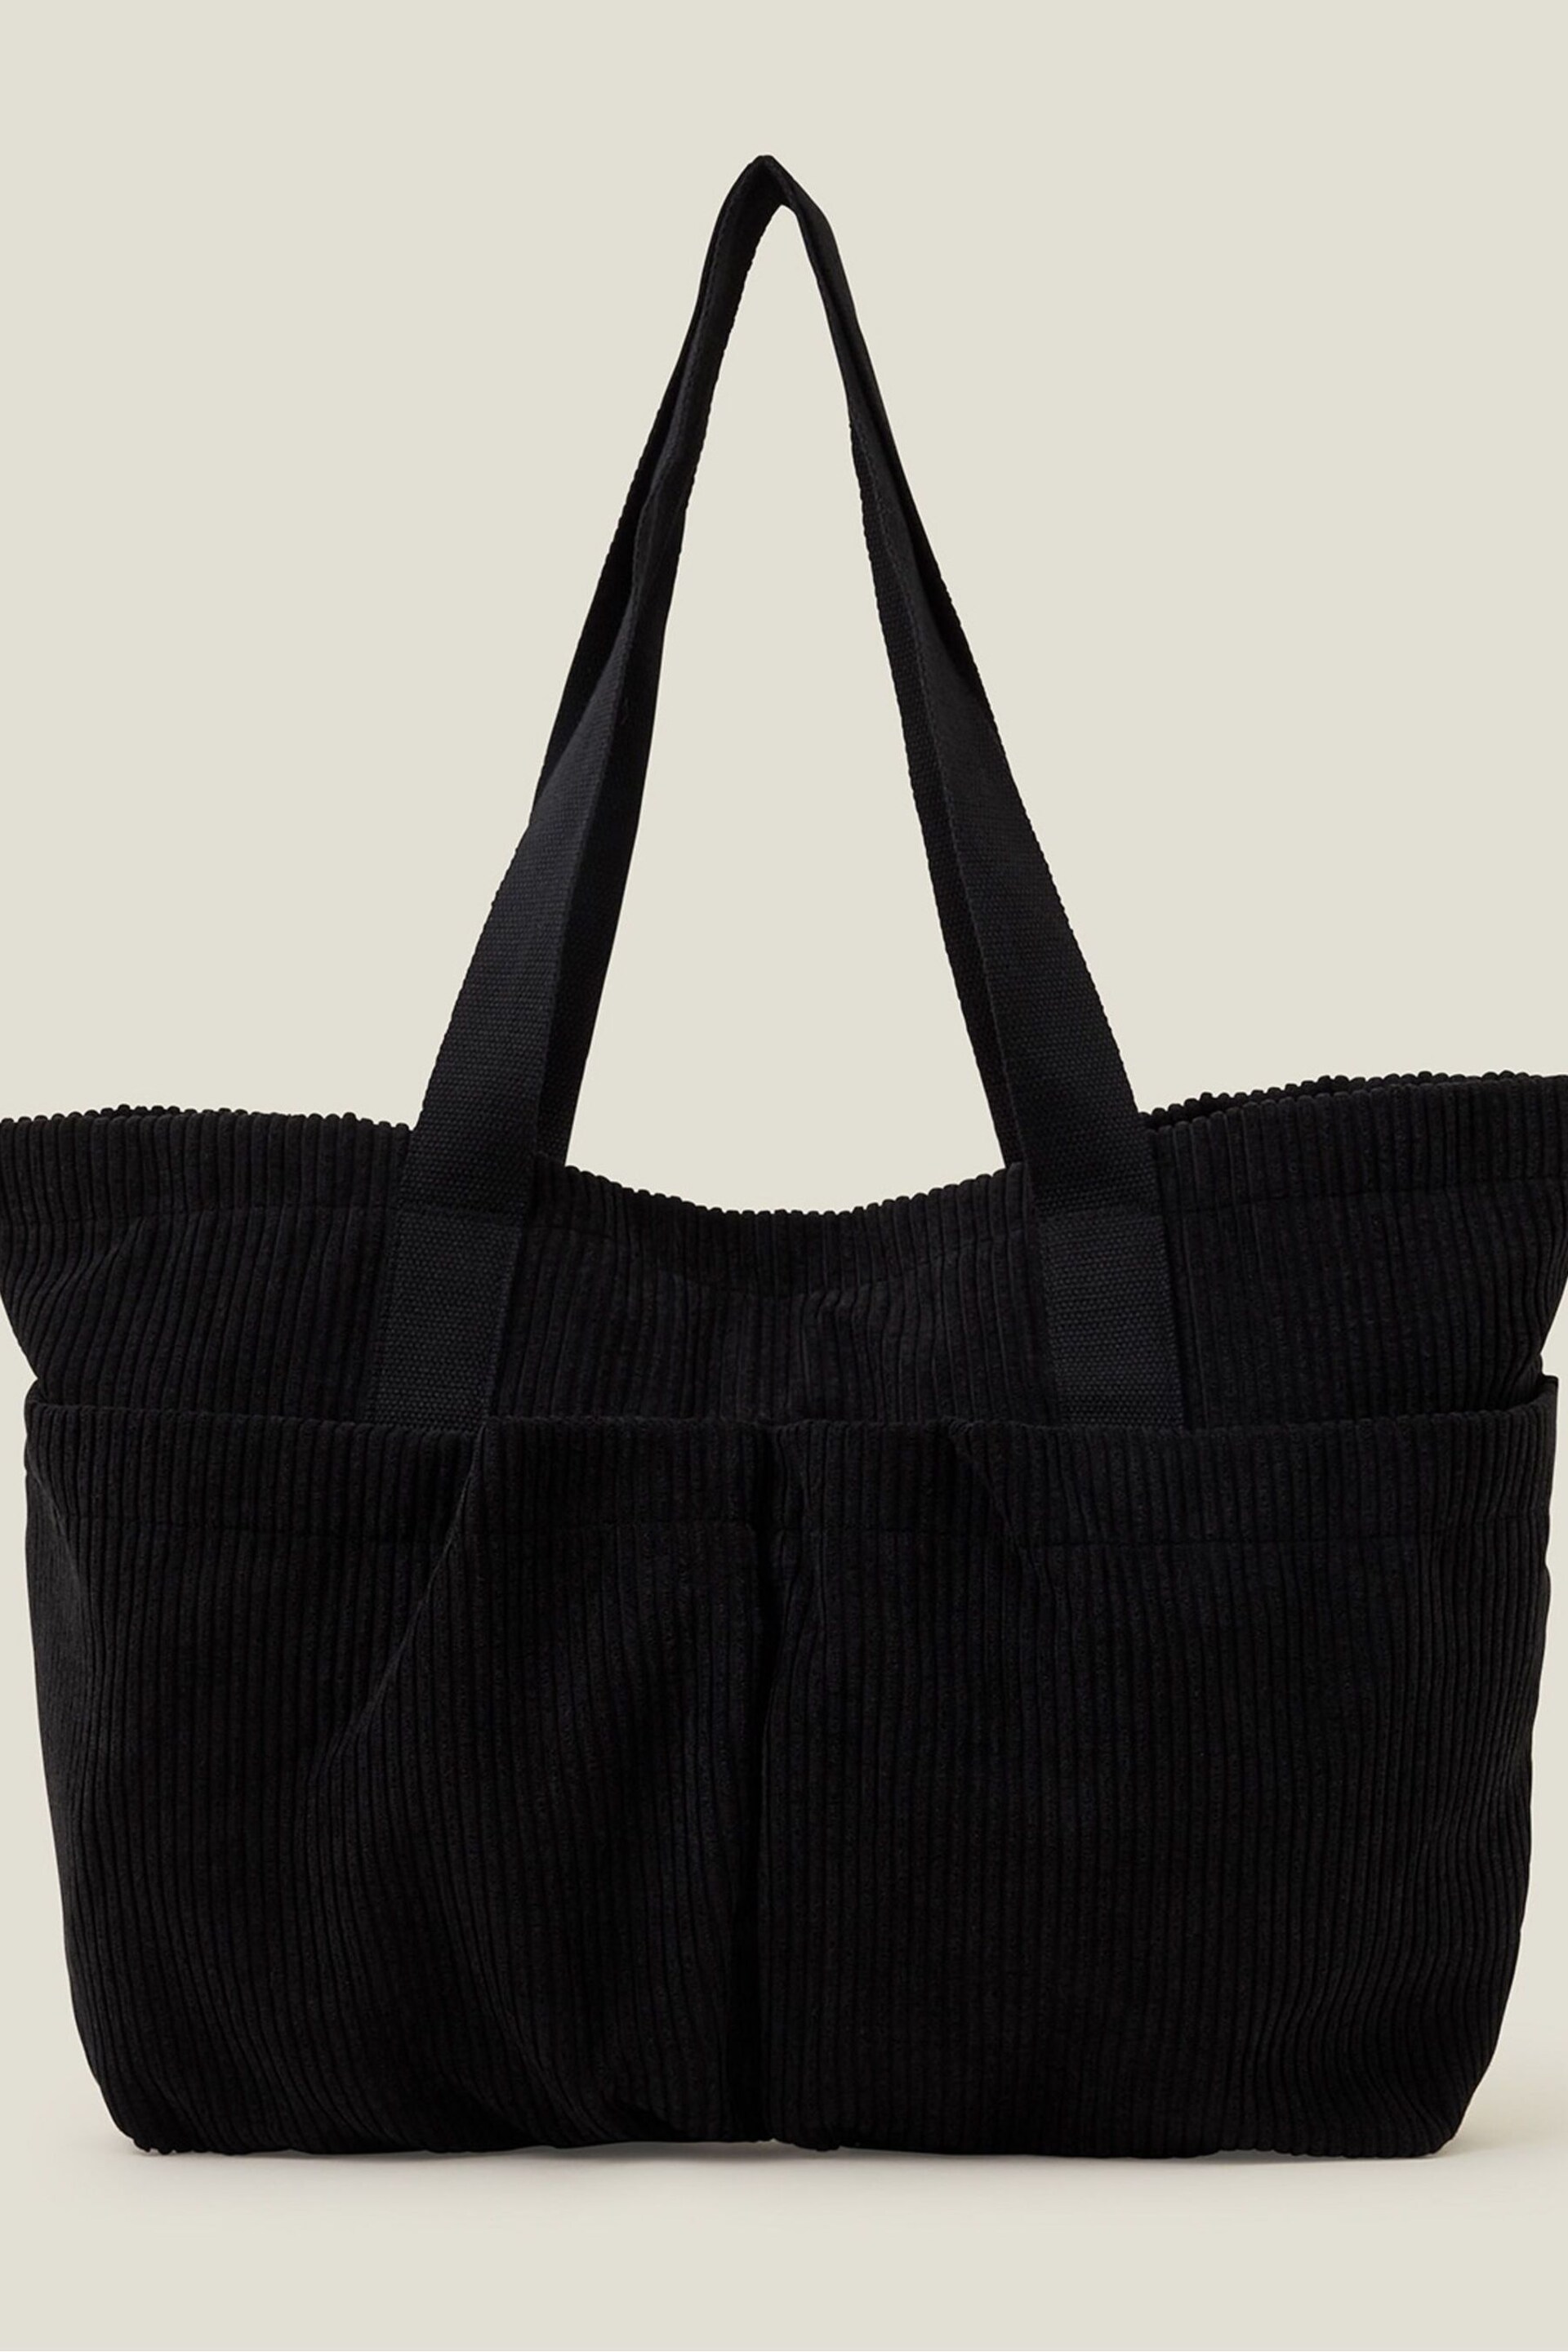 Accessorize Black Large Cord Shopper Bag - Image 2 of 3